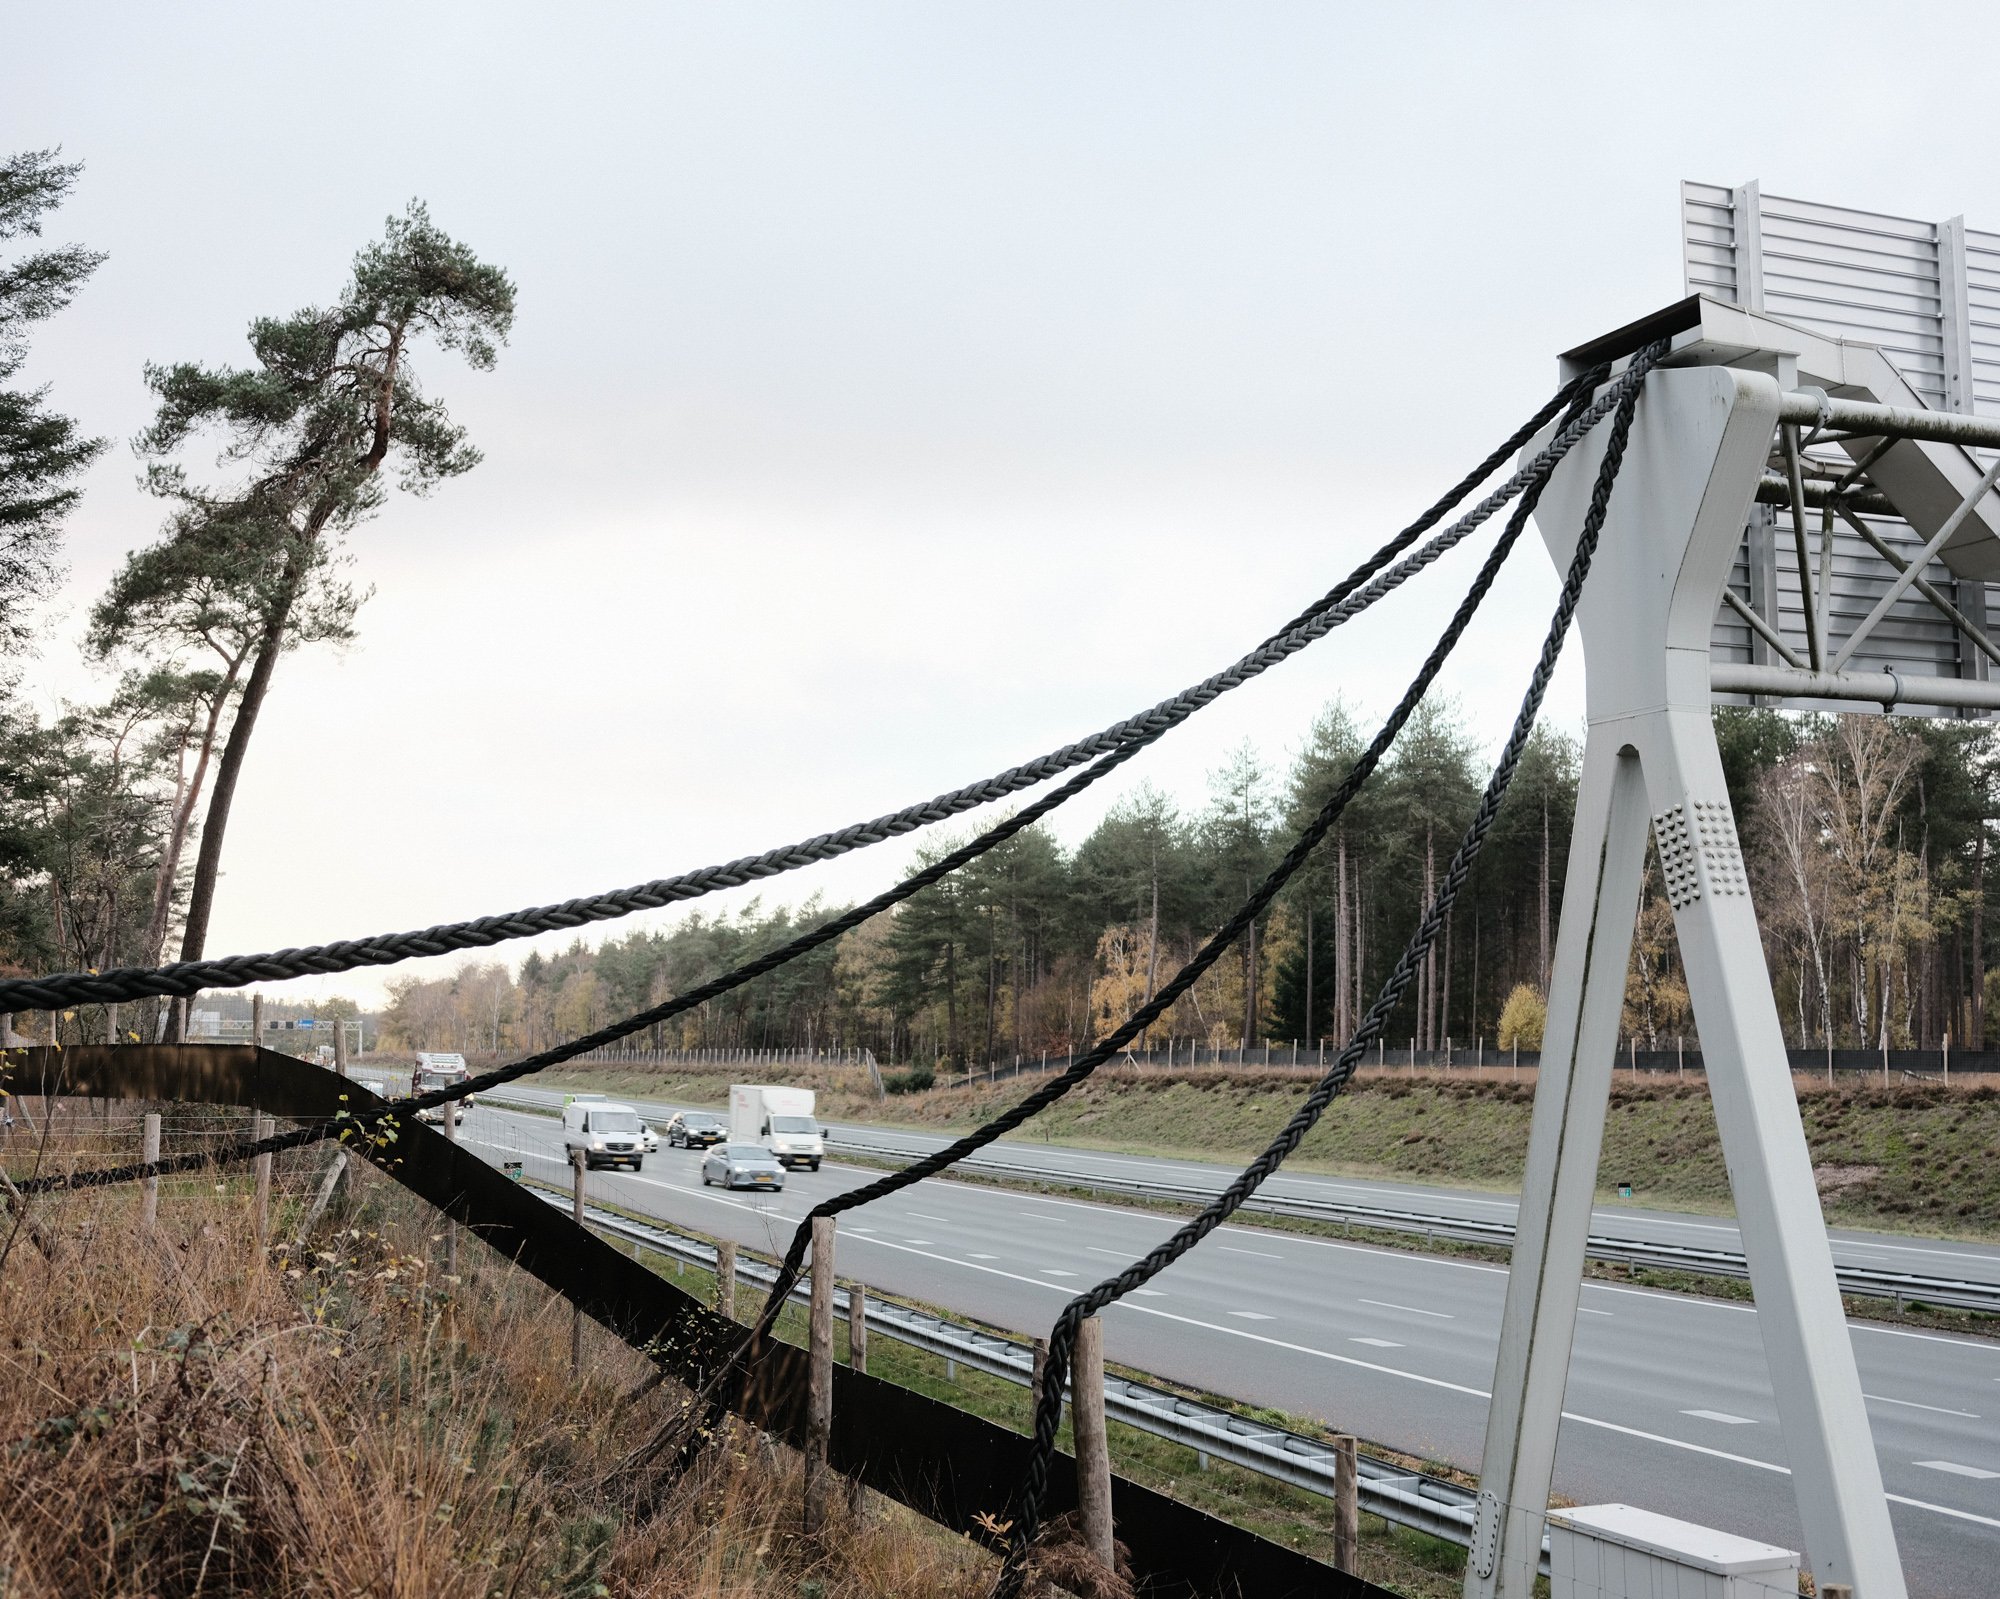  Squirrel bridge over the highway. A12, Netherlands.  